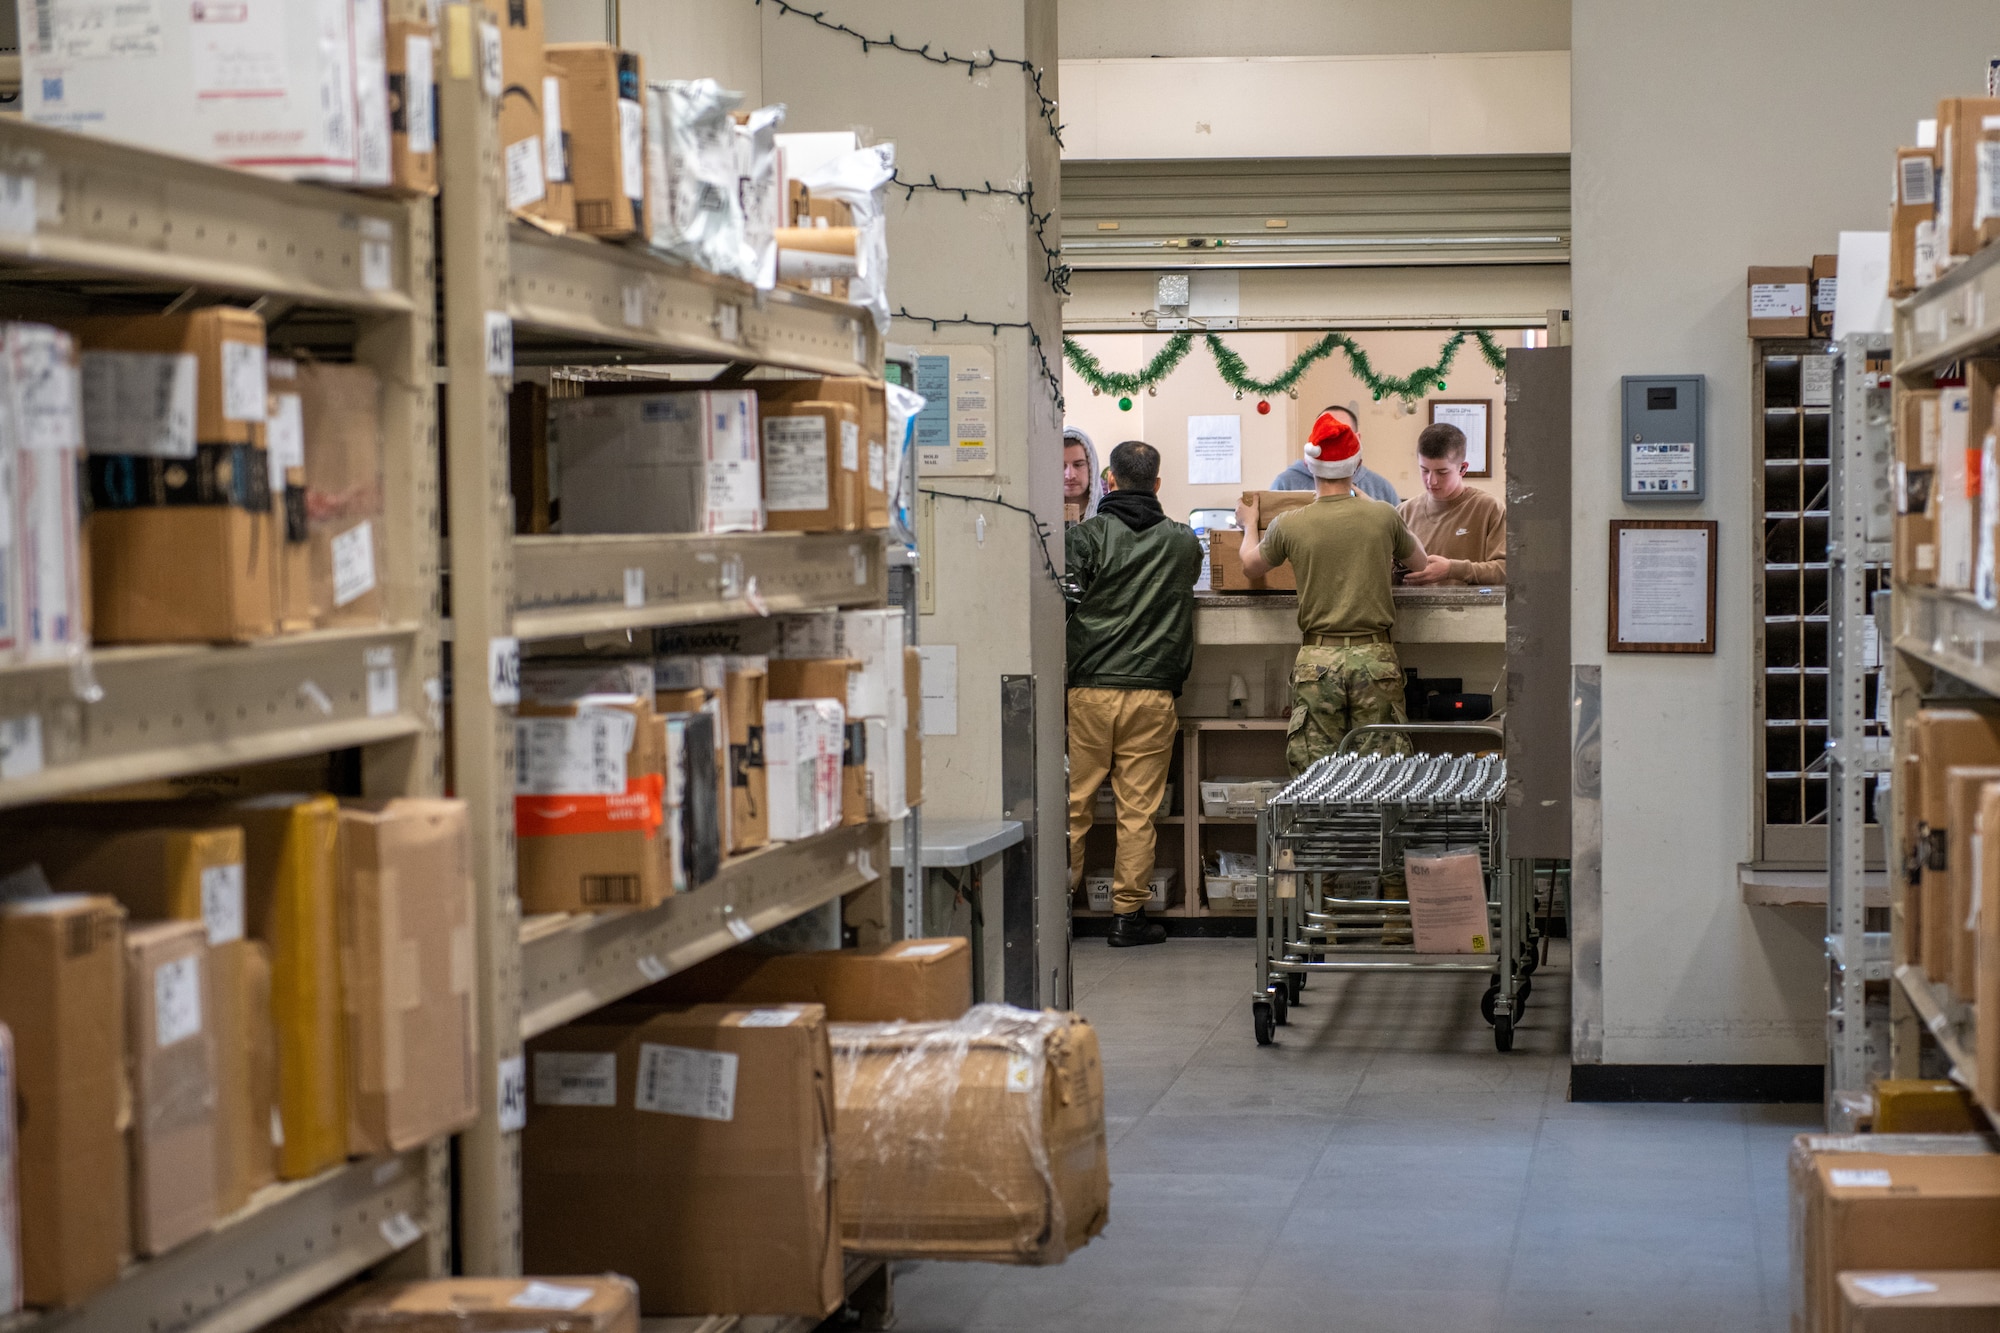 Postal clerks deliver packages to Yokota residents